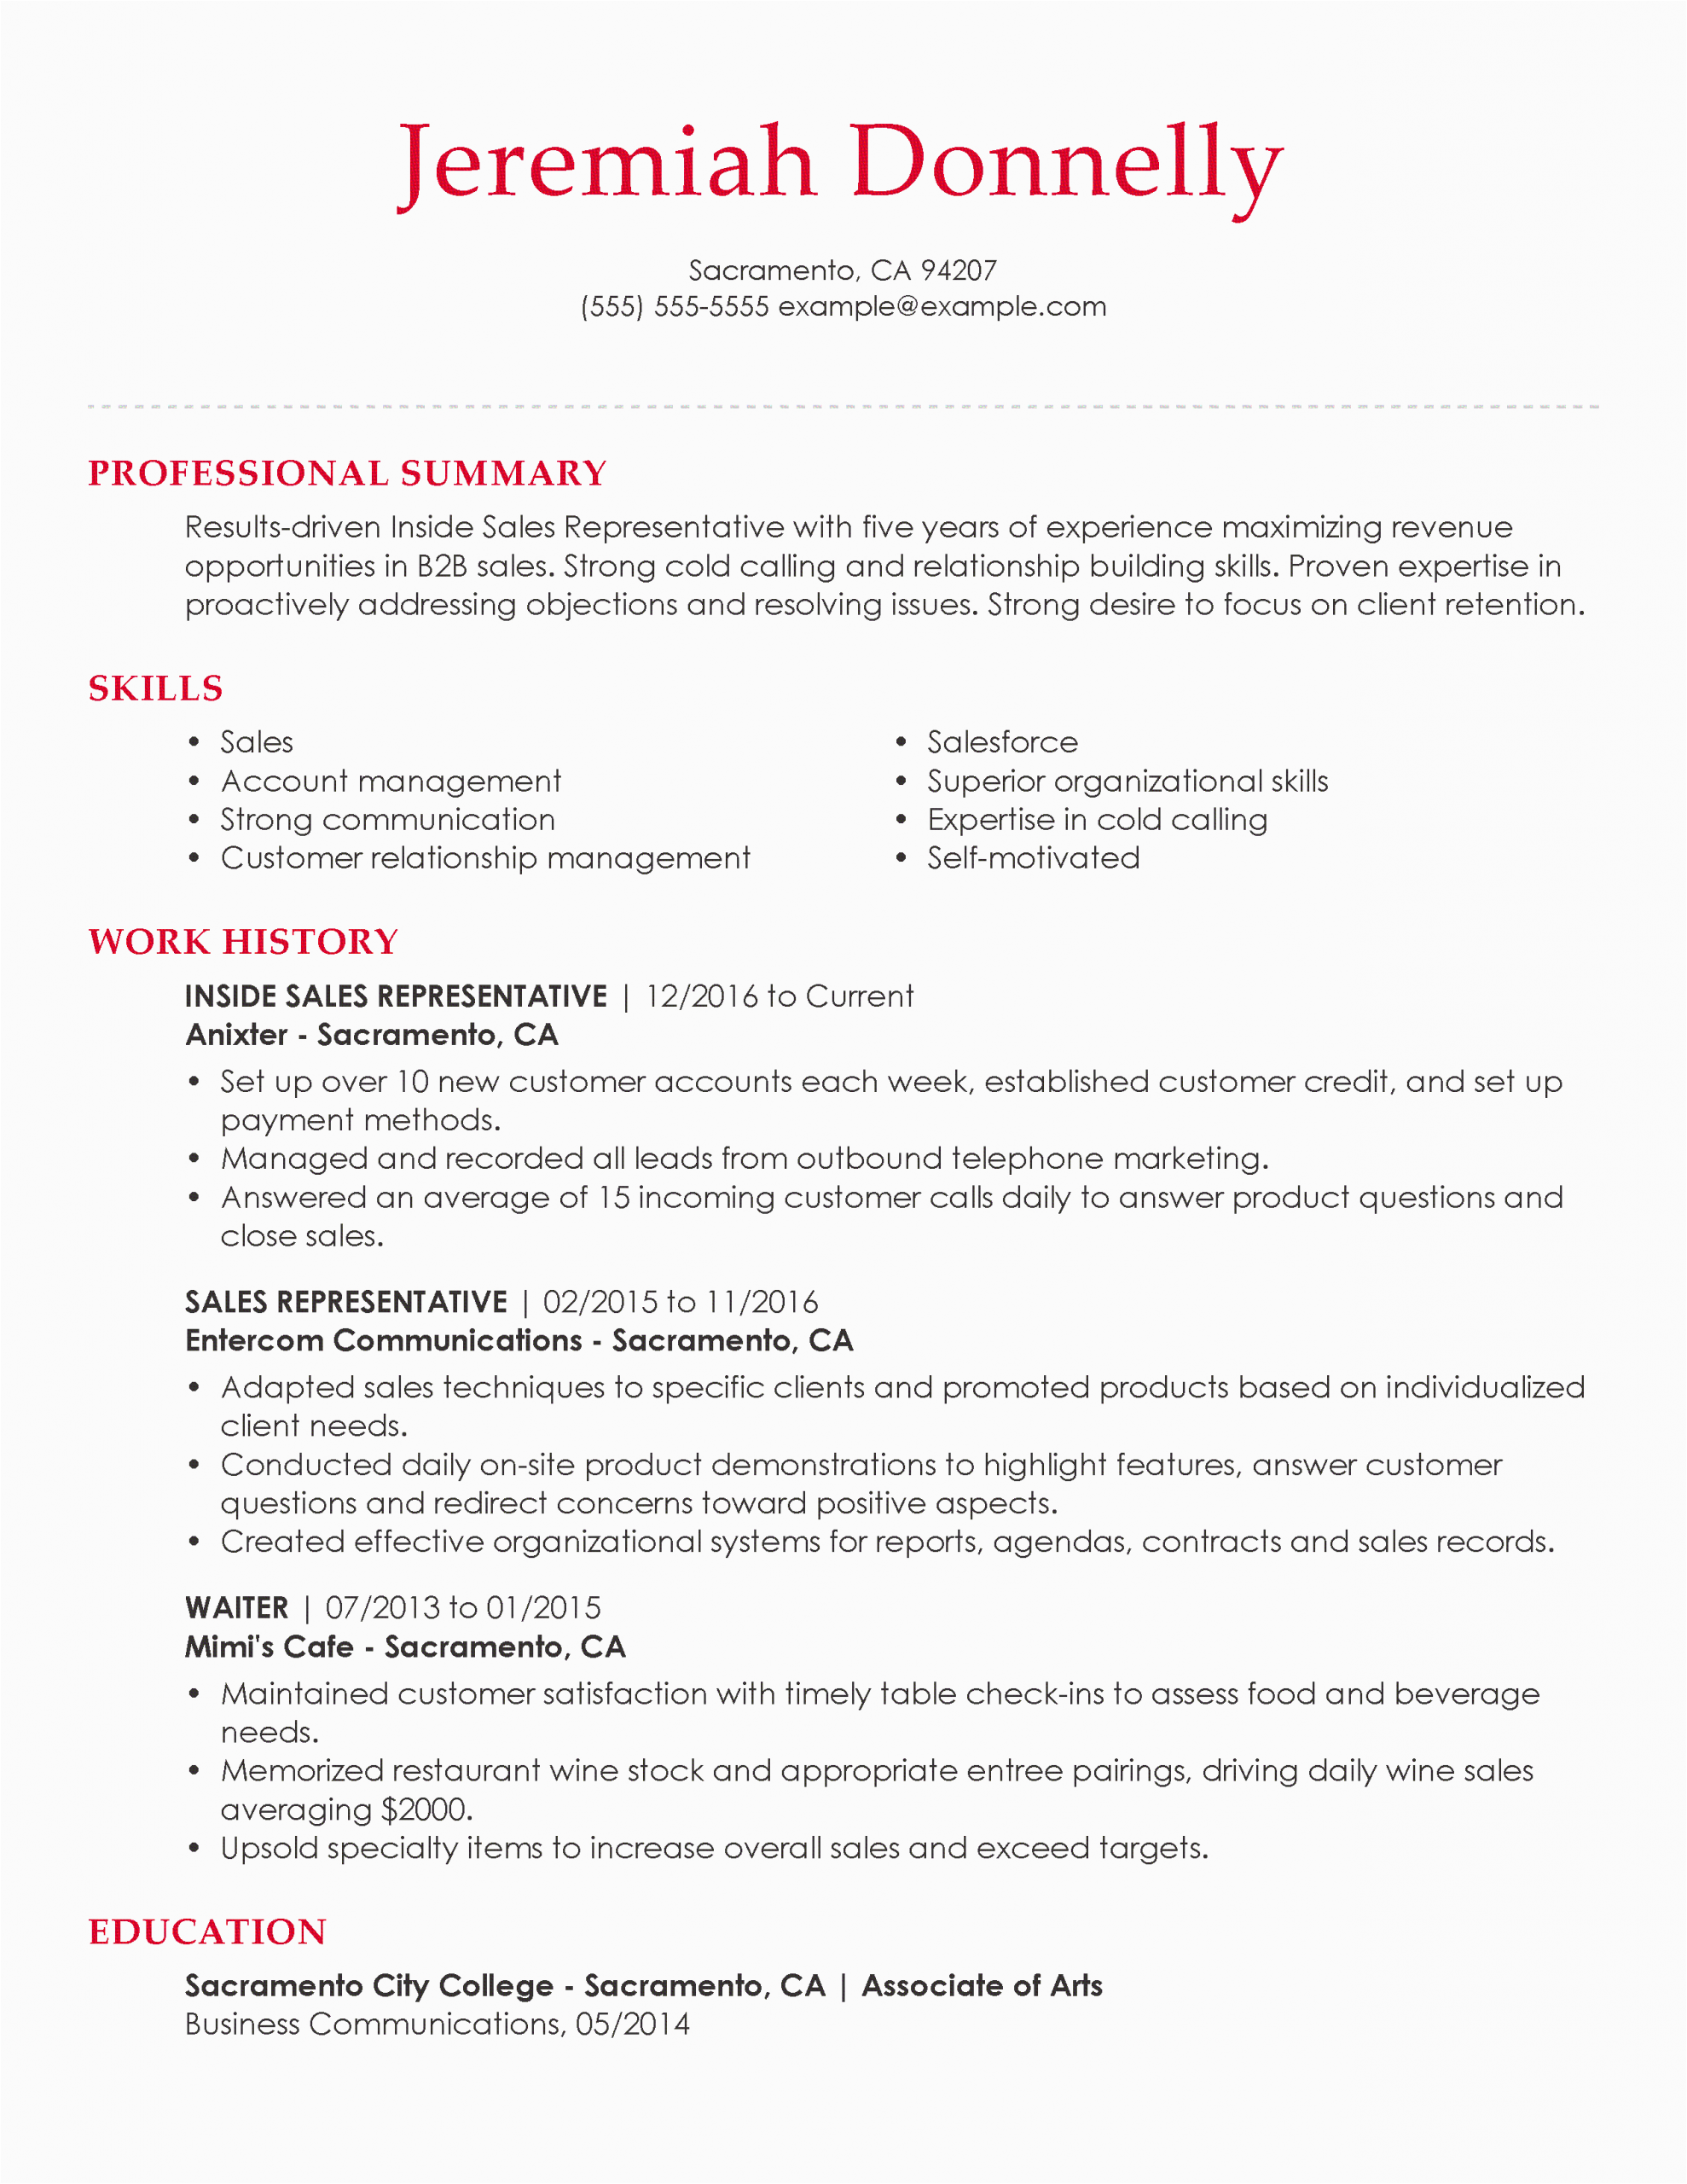 Sample Resume for Inside Sales Position Inside Sales Representative Resume Example